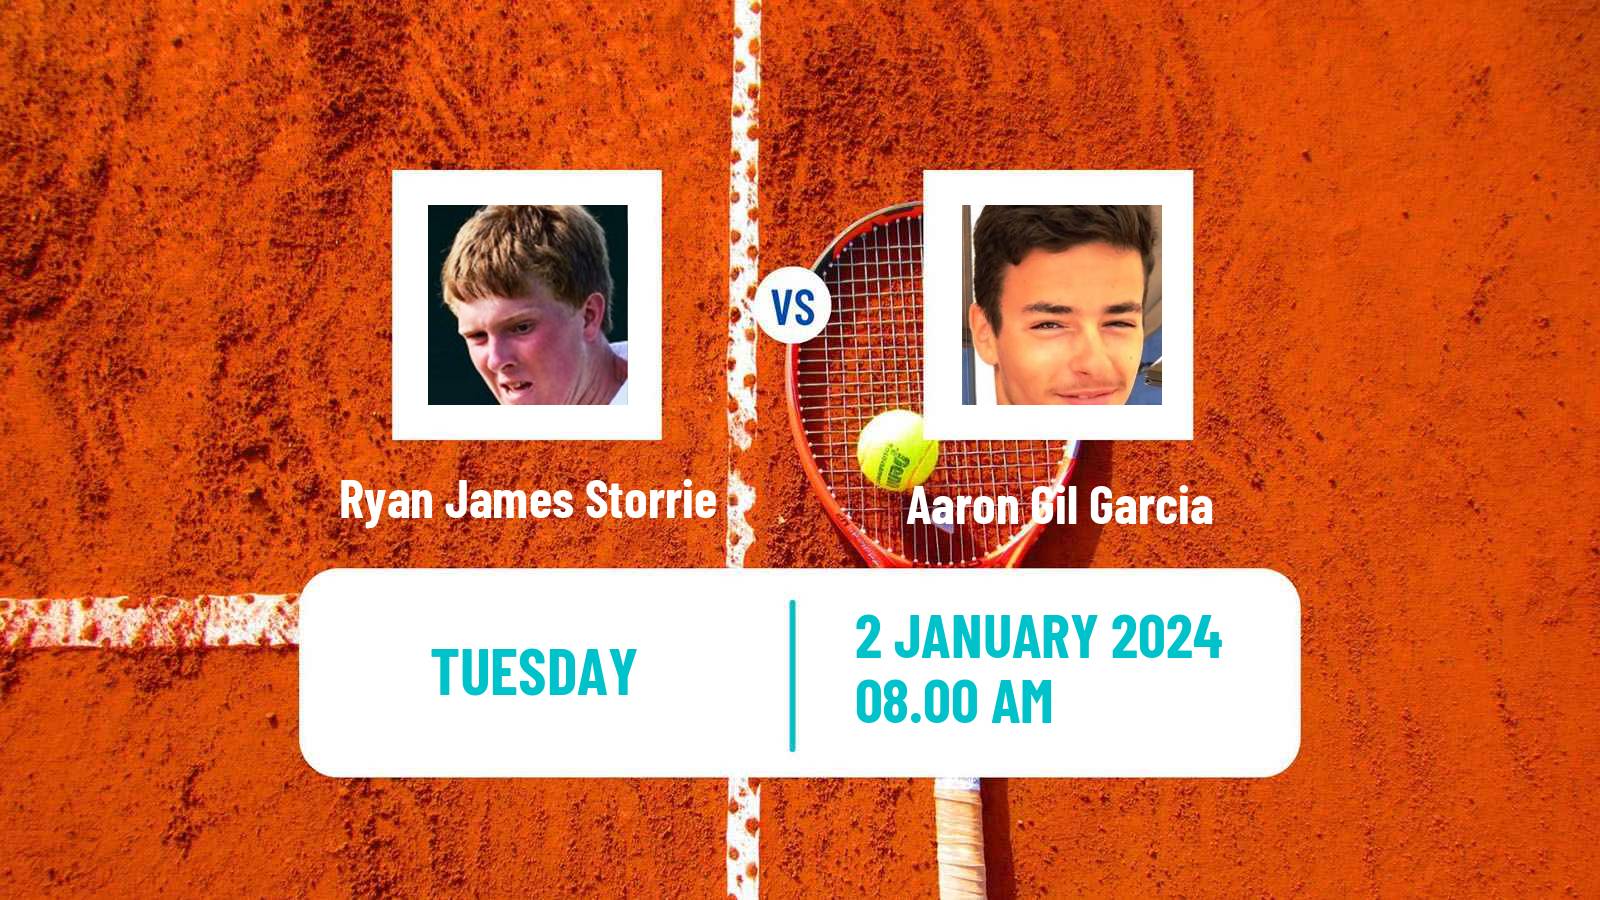 Tennis ITF M25 Esch Alzette Men Ryan James Storrie - Aaron Gil Garcia